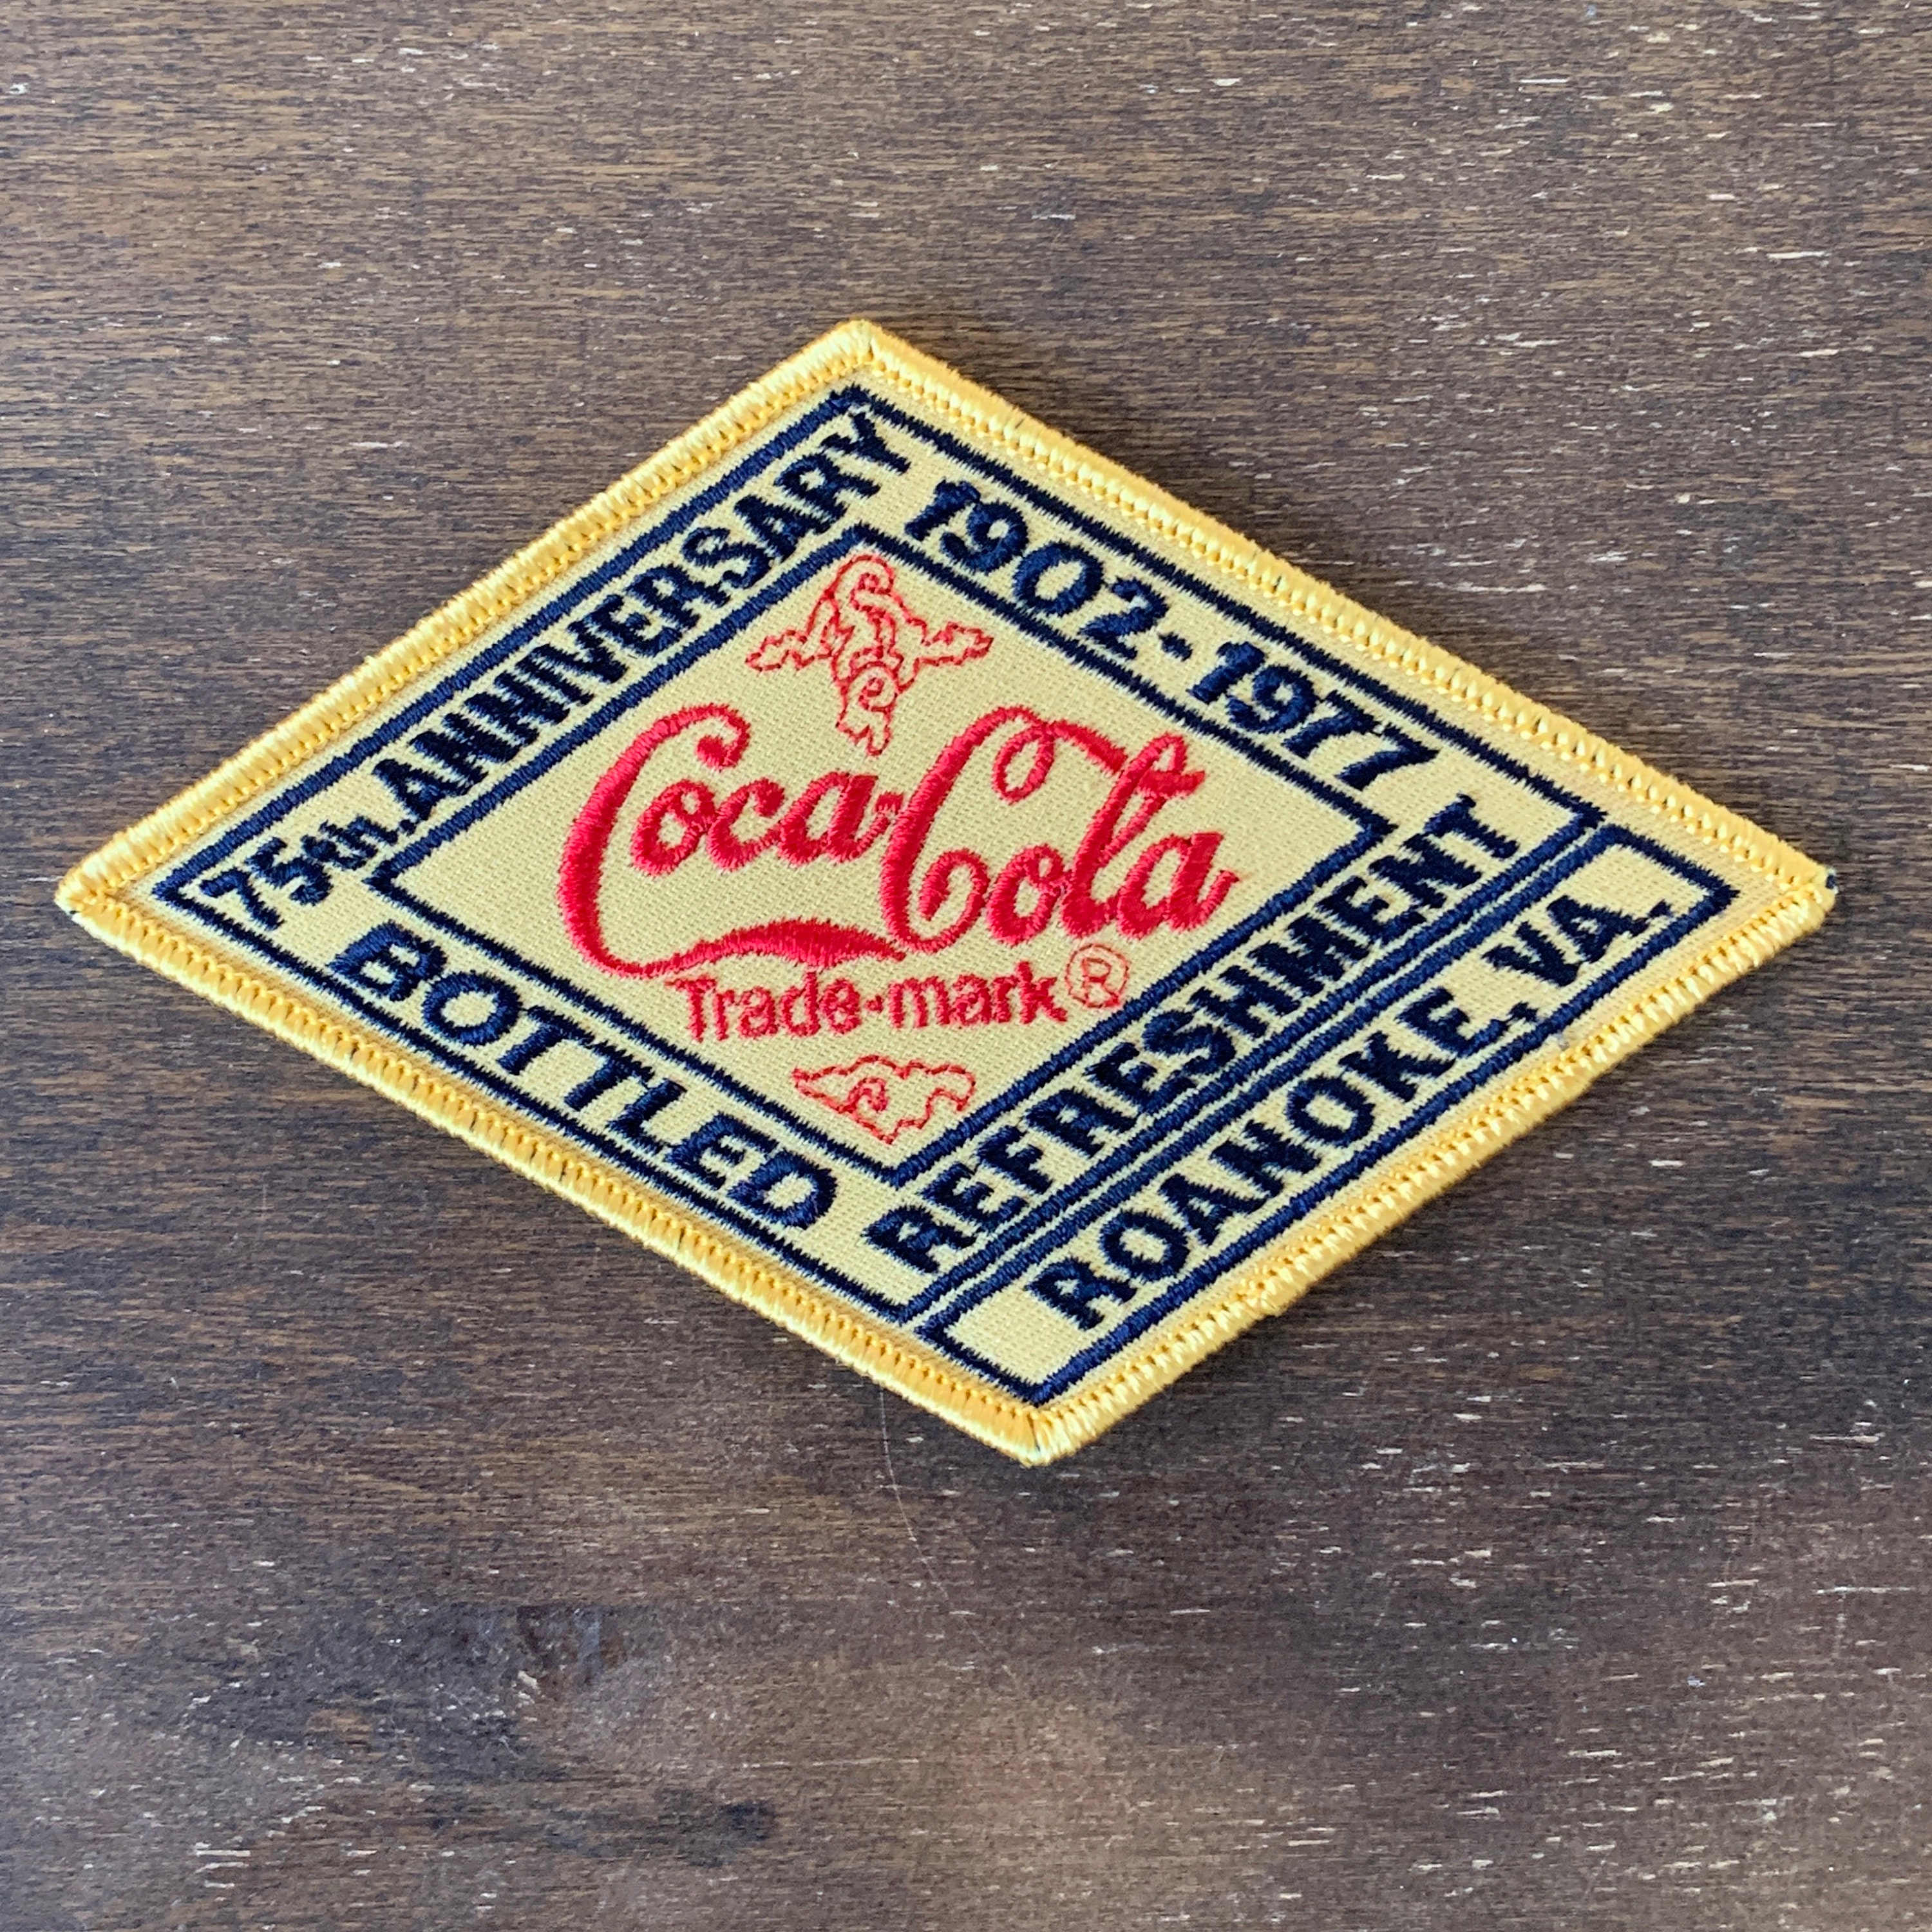 Coca Cola 75th Anniversary Roanoke VA Bottling Company Patch image photo